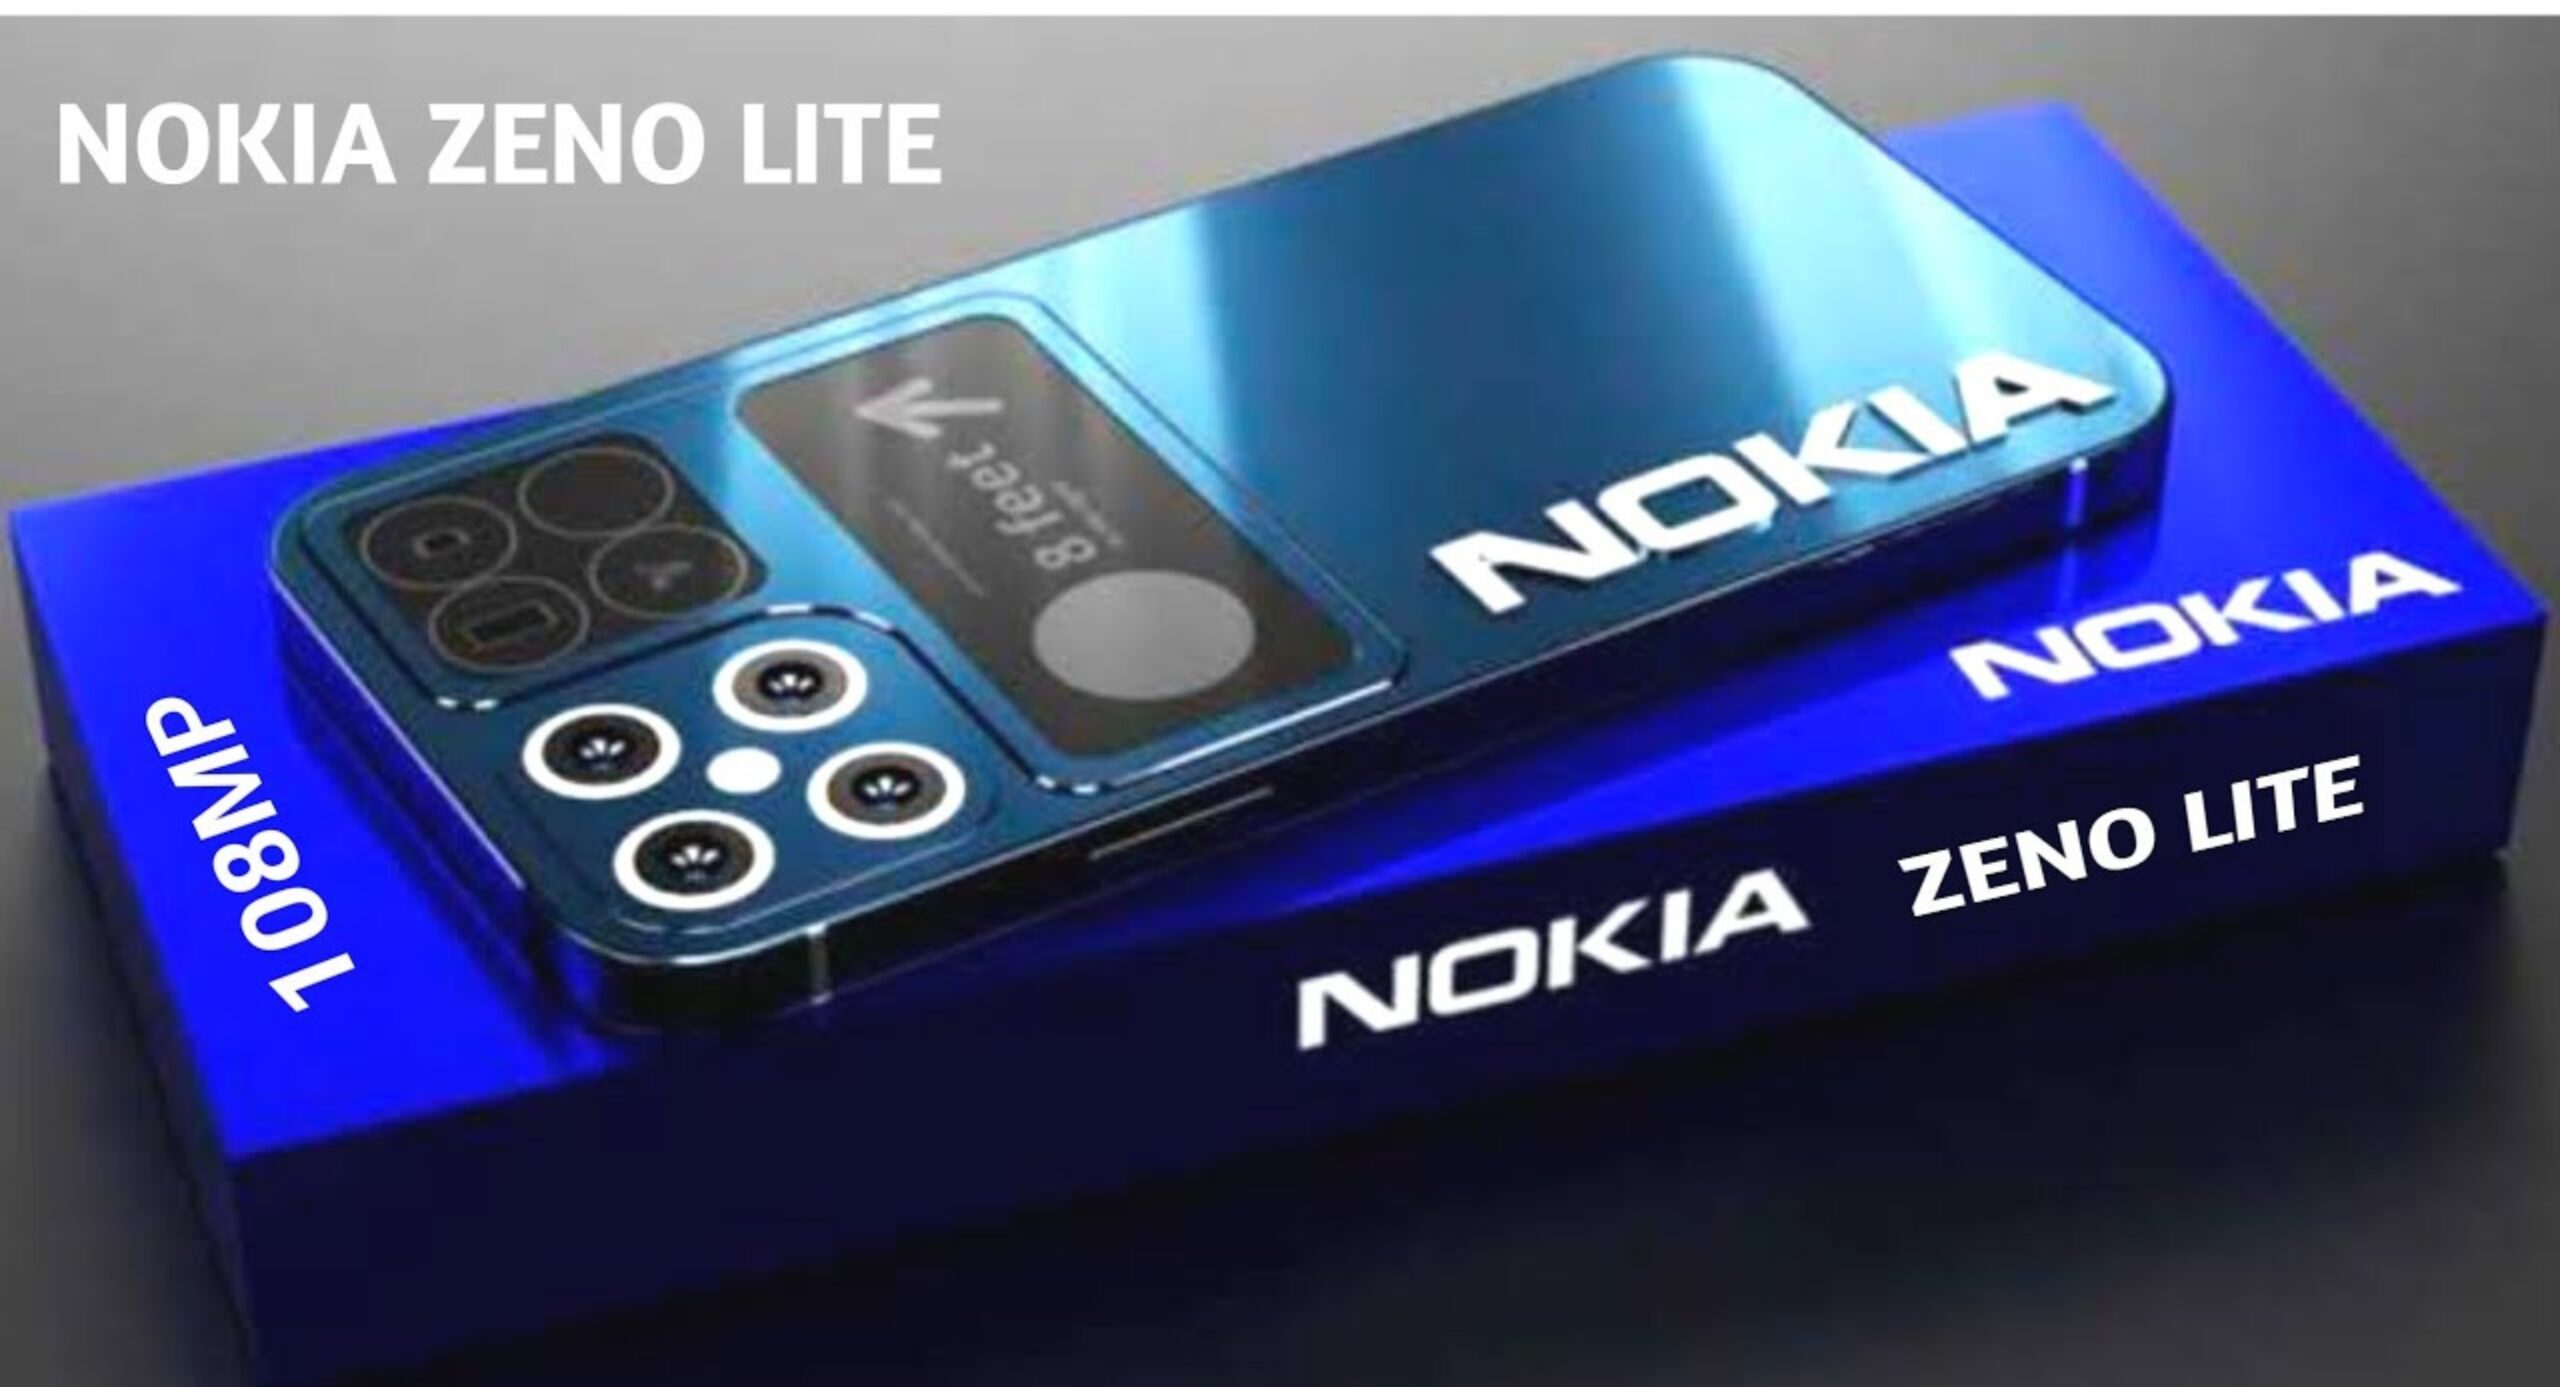 Nokia 1100 Zeno Lite Smartphone